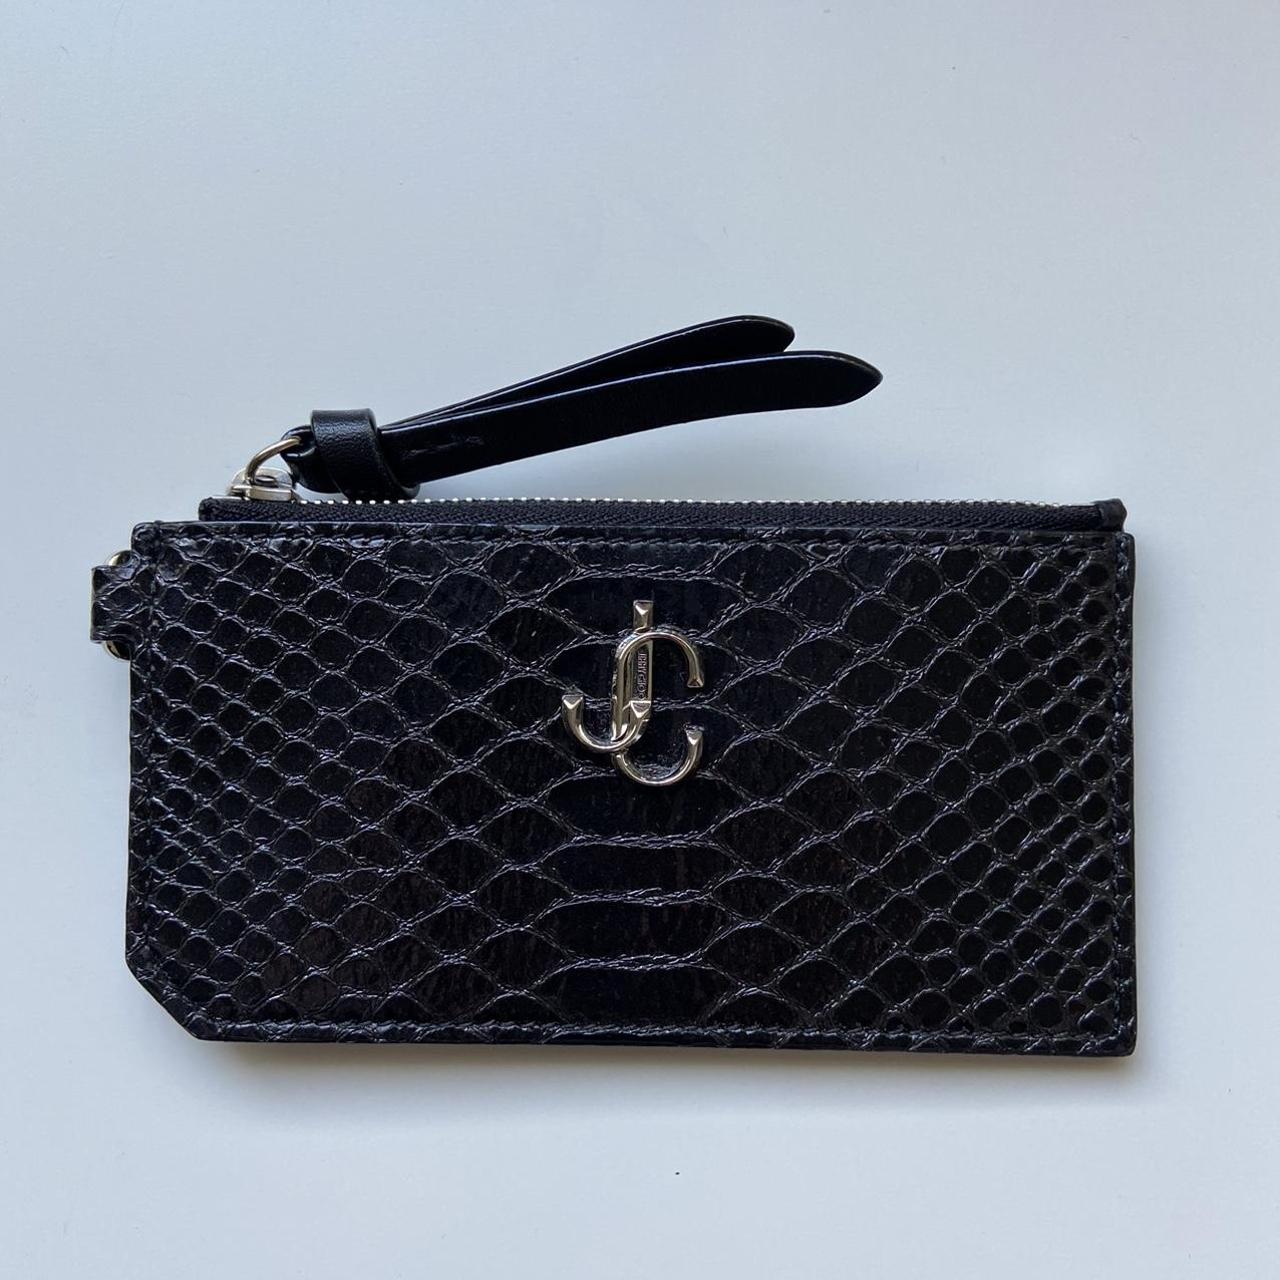 How to Spot a Fake Jimmy Choo Handbag? - My Luxury Bargain